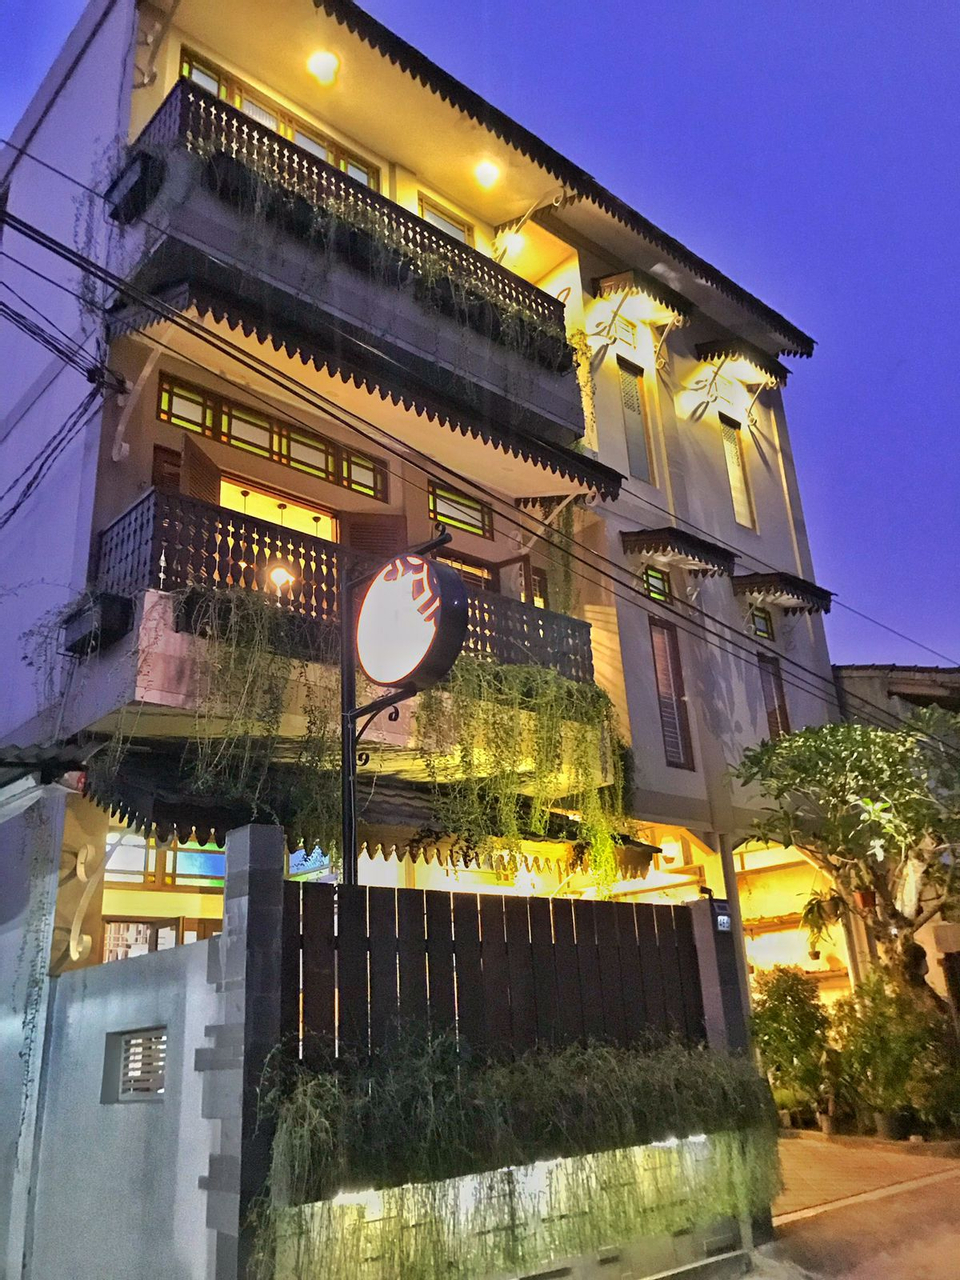 Exterior & Views 2, Rumah Kandjani, Yogyakarta